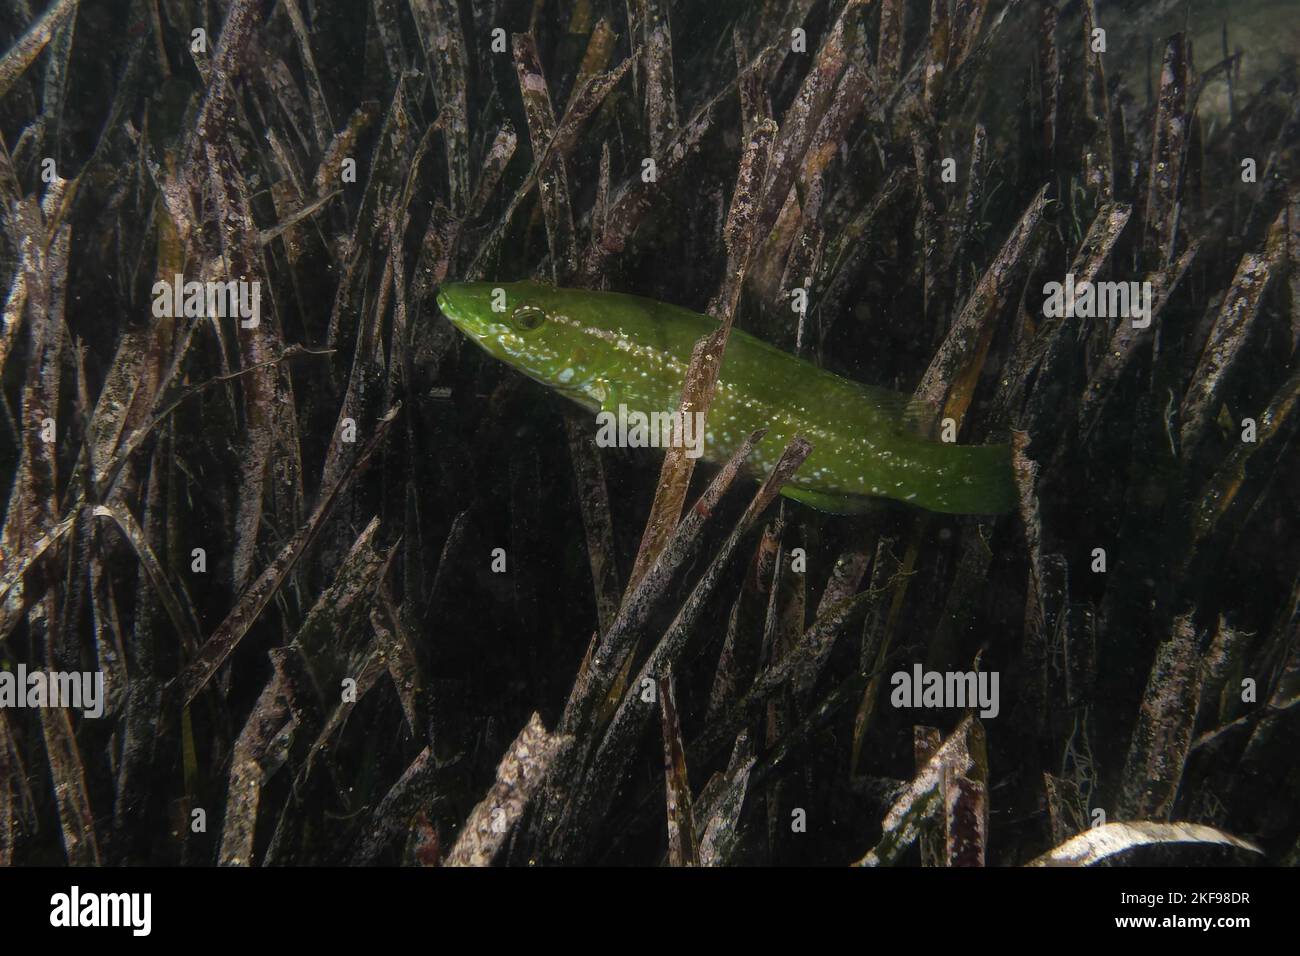 Juvenile Green wrasse (Labrus viridis) in Mediterranean Sea Stock Photo